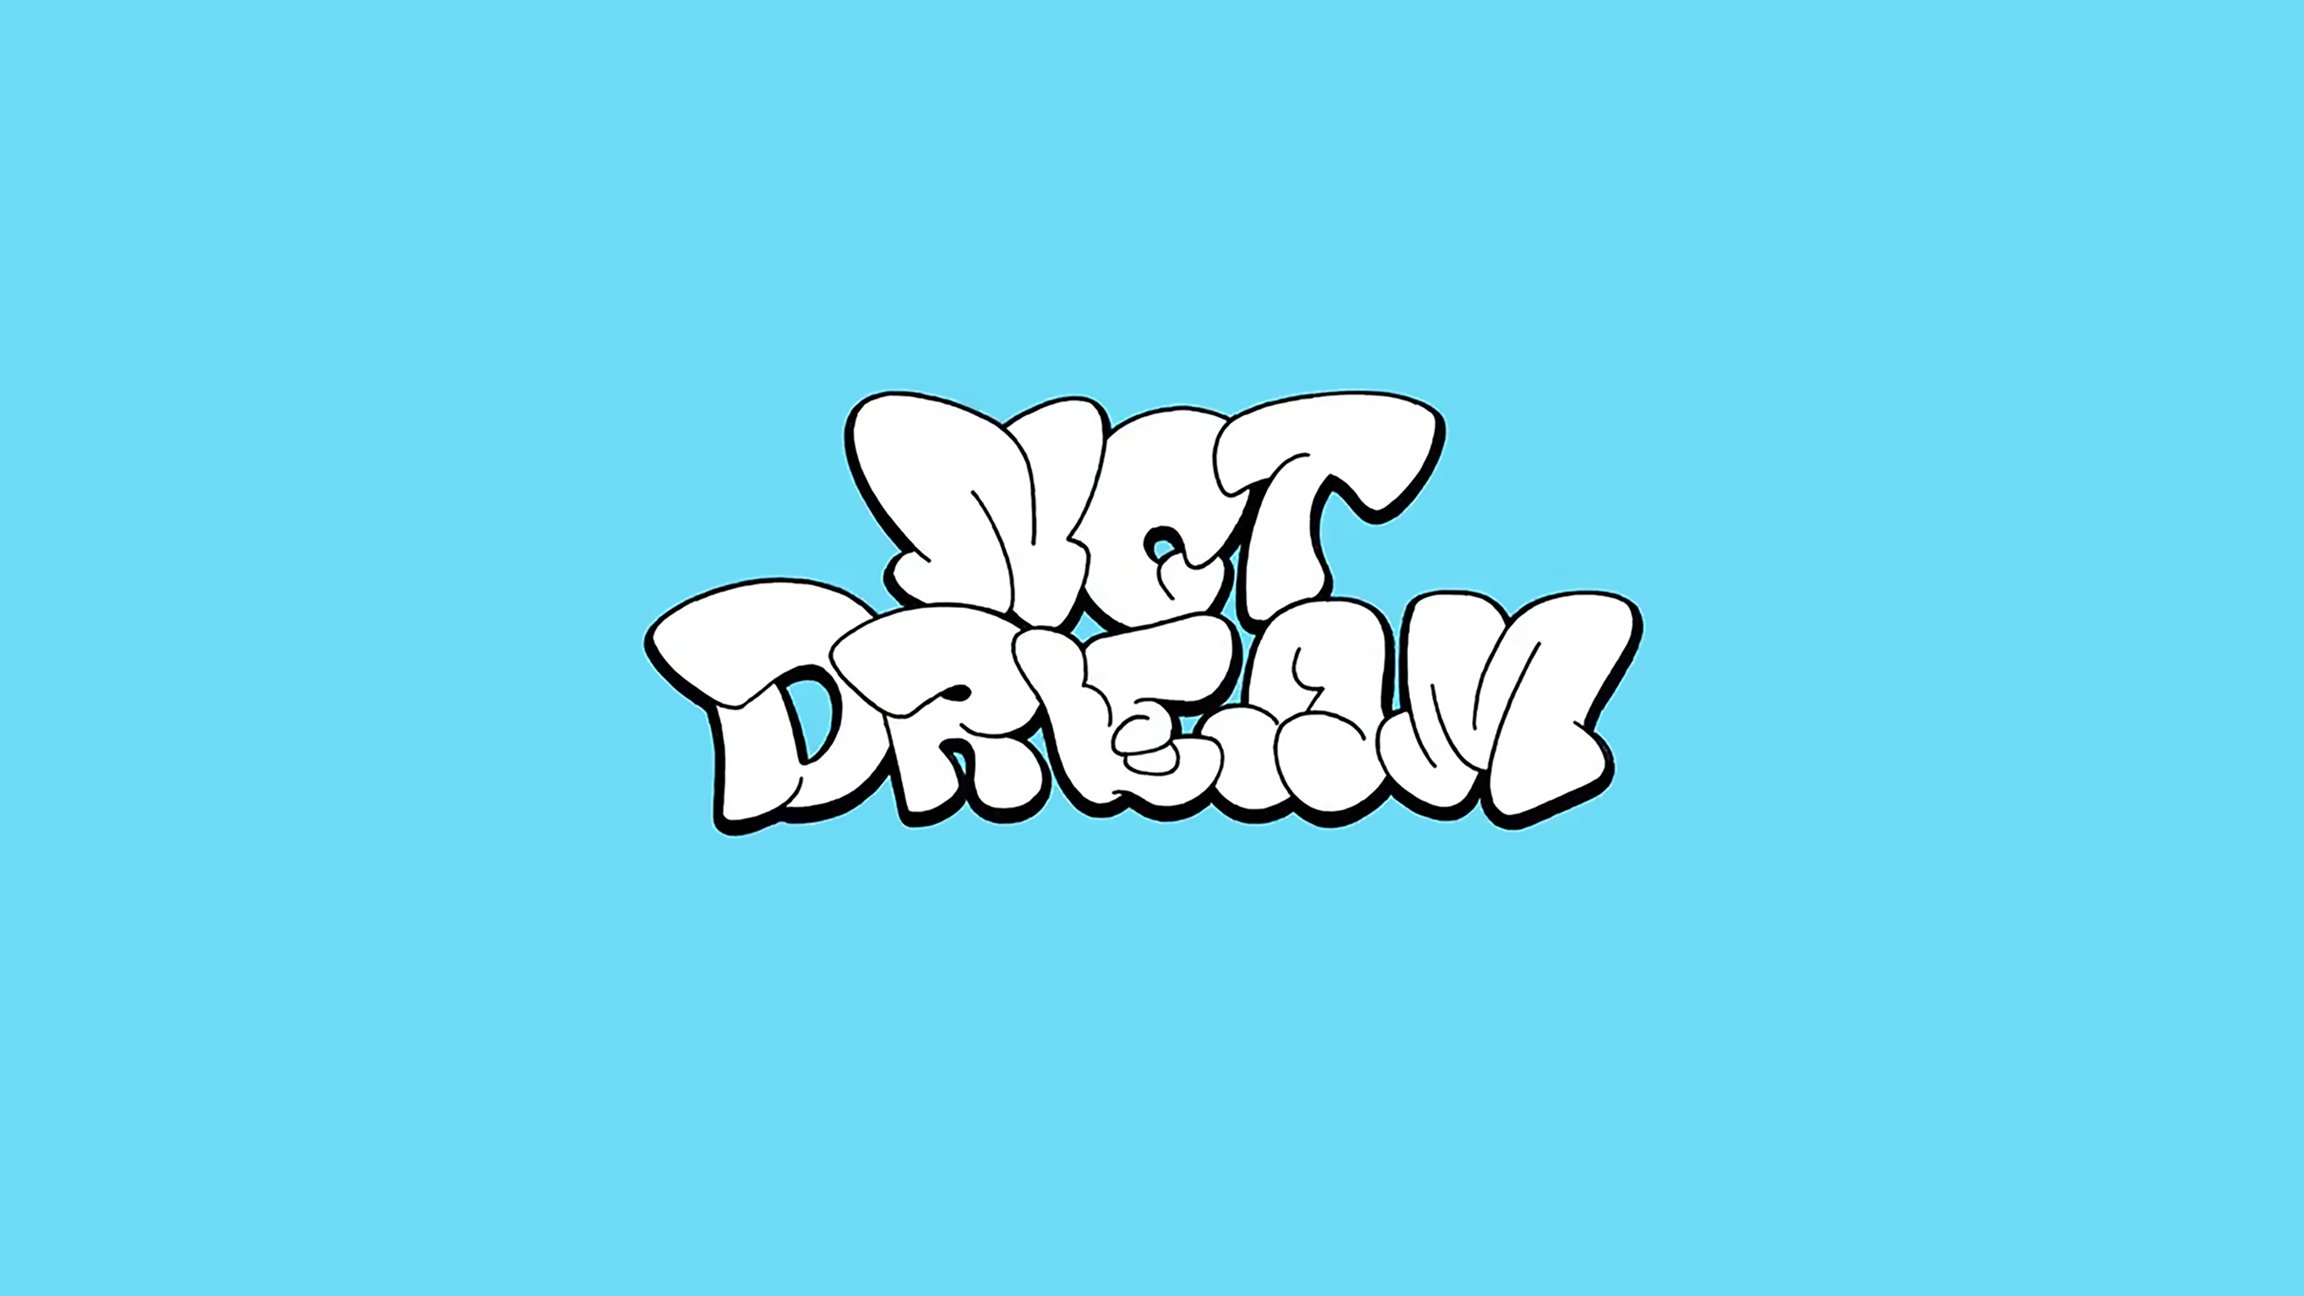 cipa ☁️ - ☁ NCT DREAM Beatbox desktop wallpaper ☁ a thread;